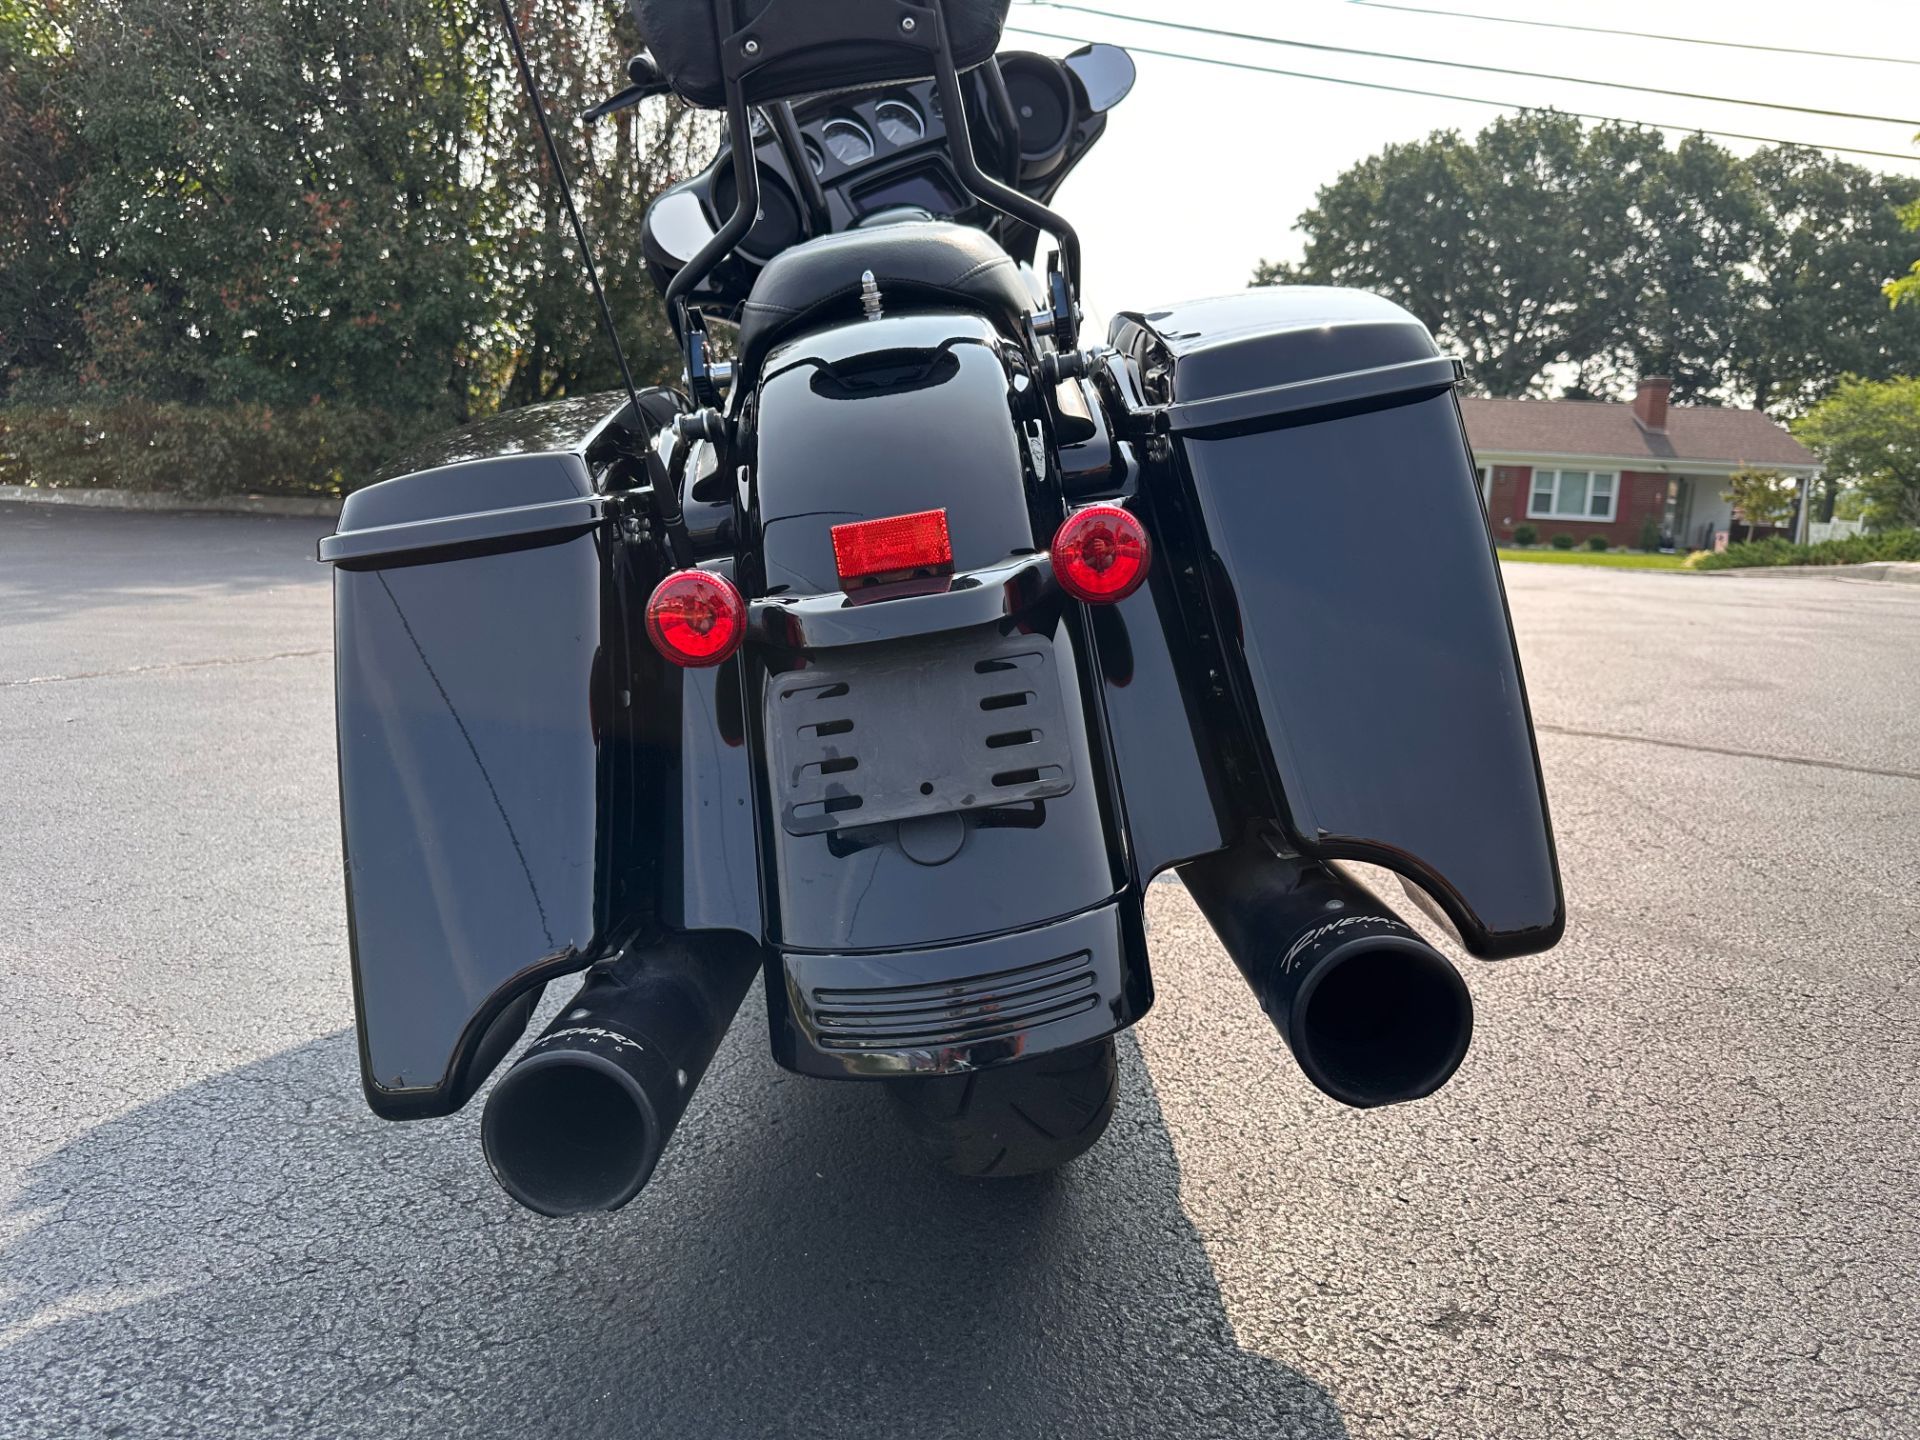 2019 Harley-Davidson Street Glide® Special in Lynchburg, Virginia - Photo 28